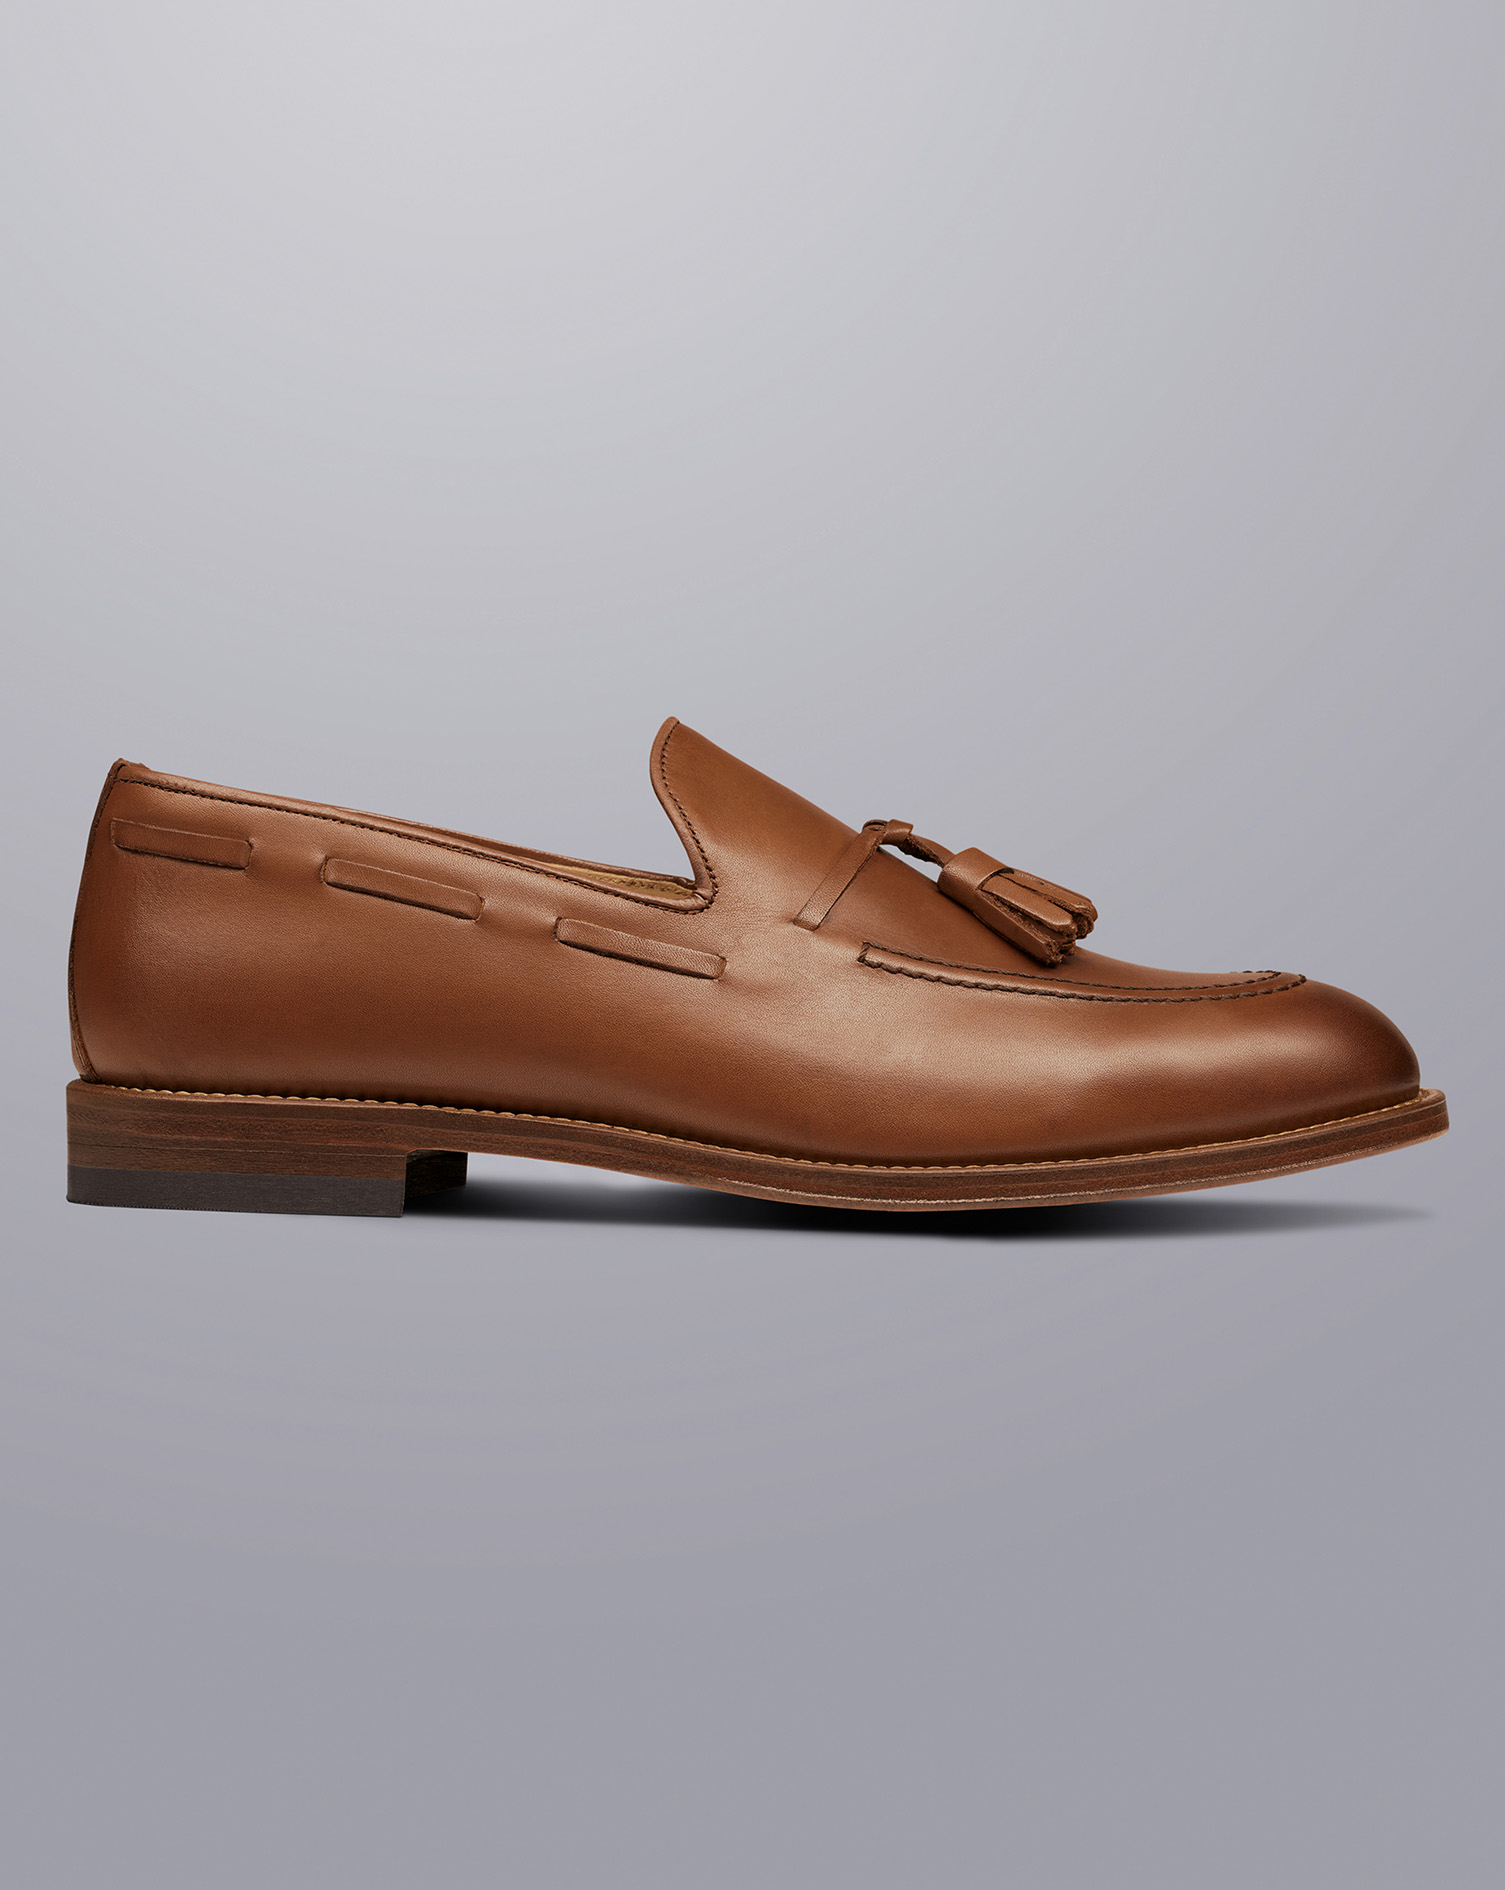 Men's Charles Tyrwhitt Leather Tassel Loafers - Walnut Brown Size 12
